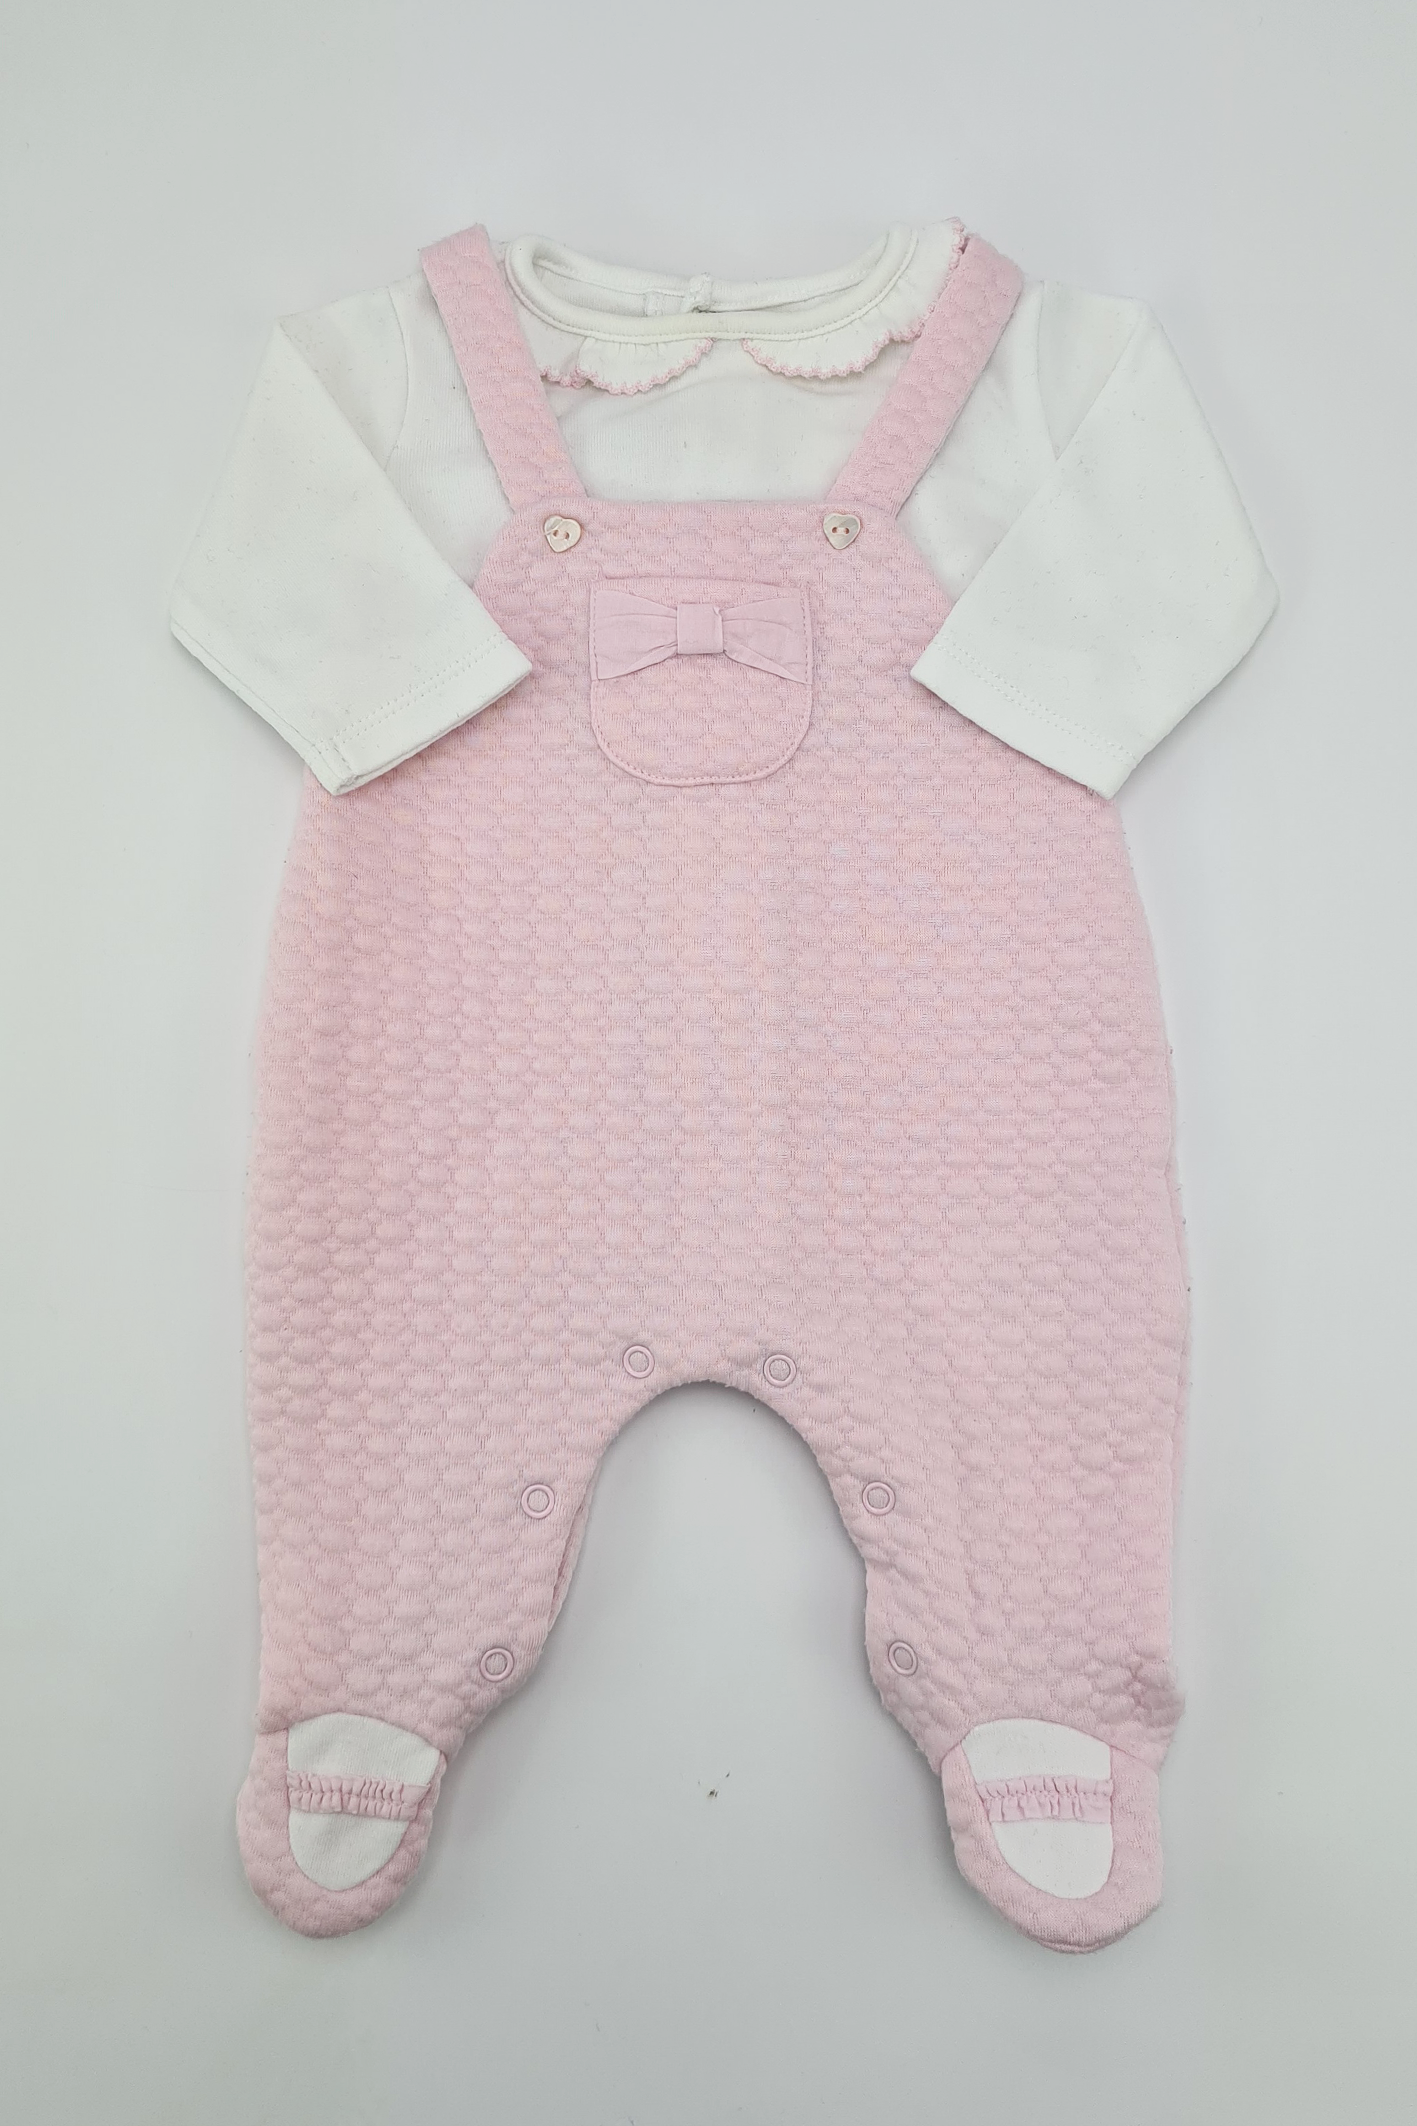 Neugeborenes – Latzhosen-Outfit mit rosa Füßen